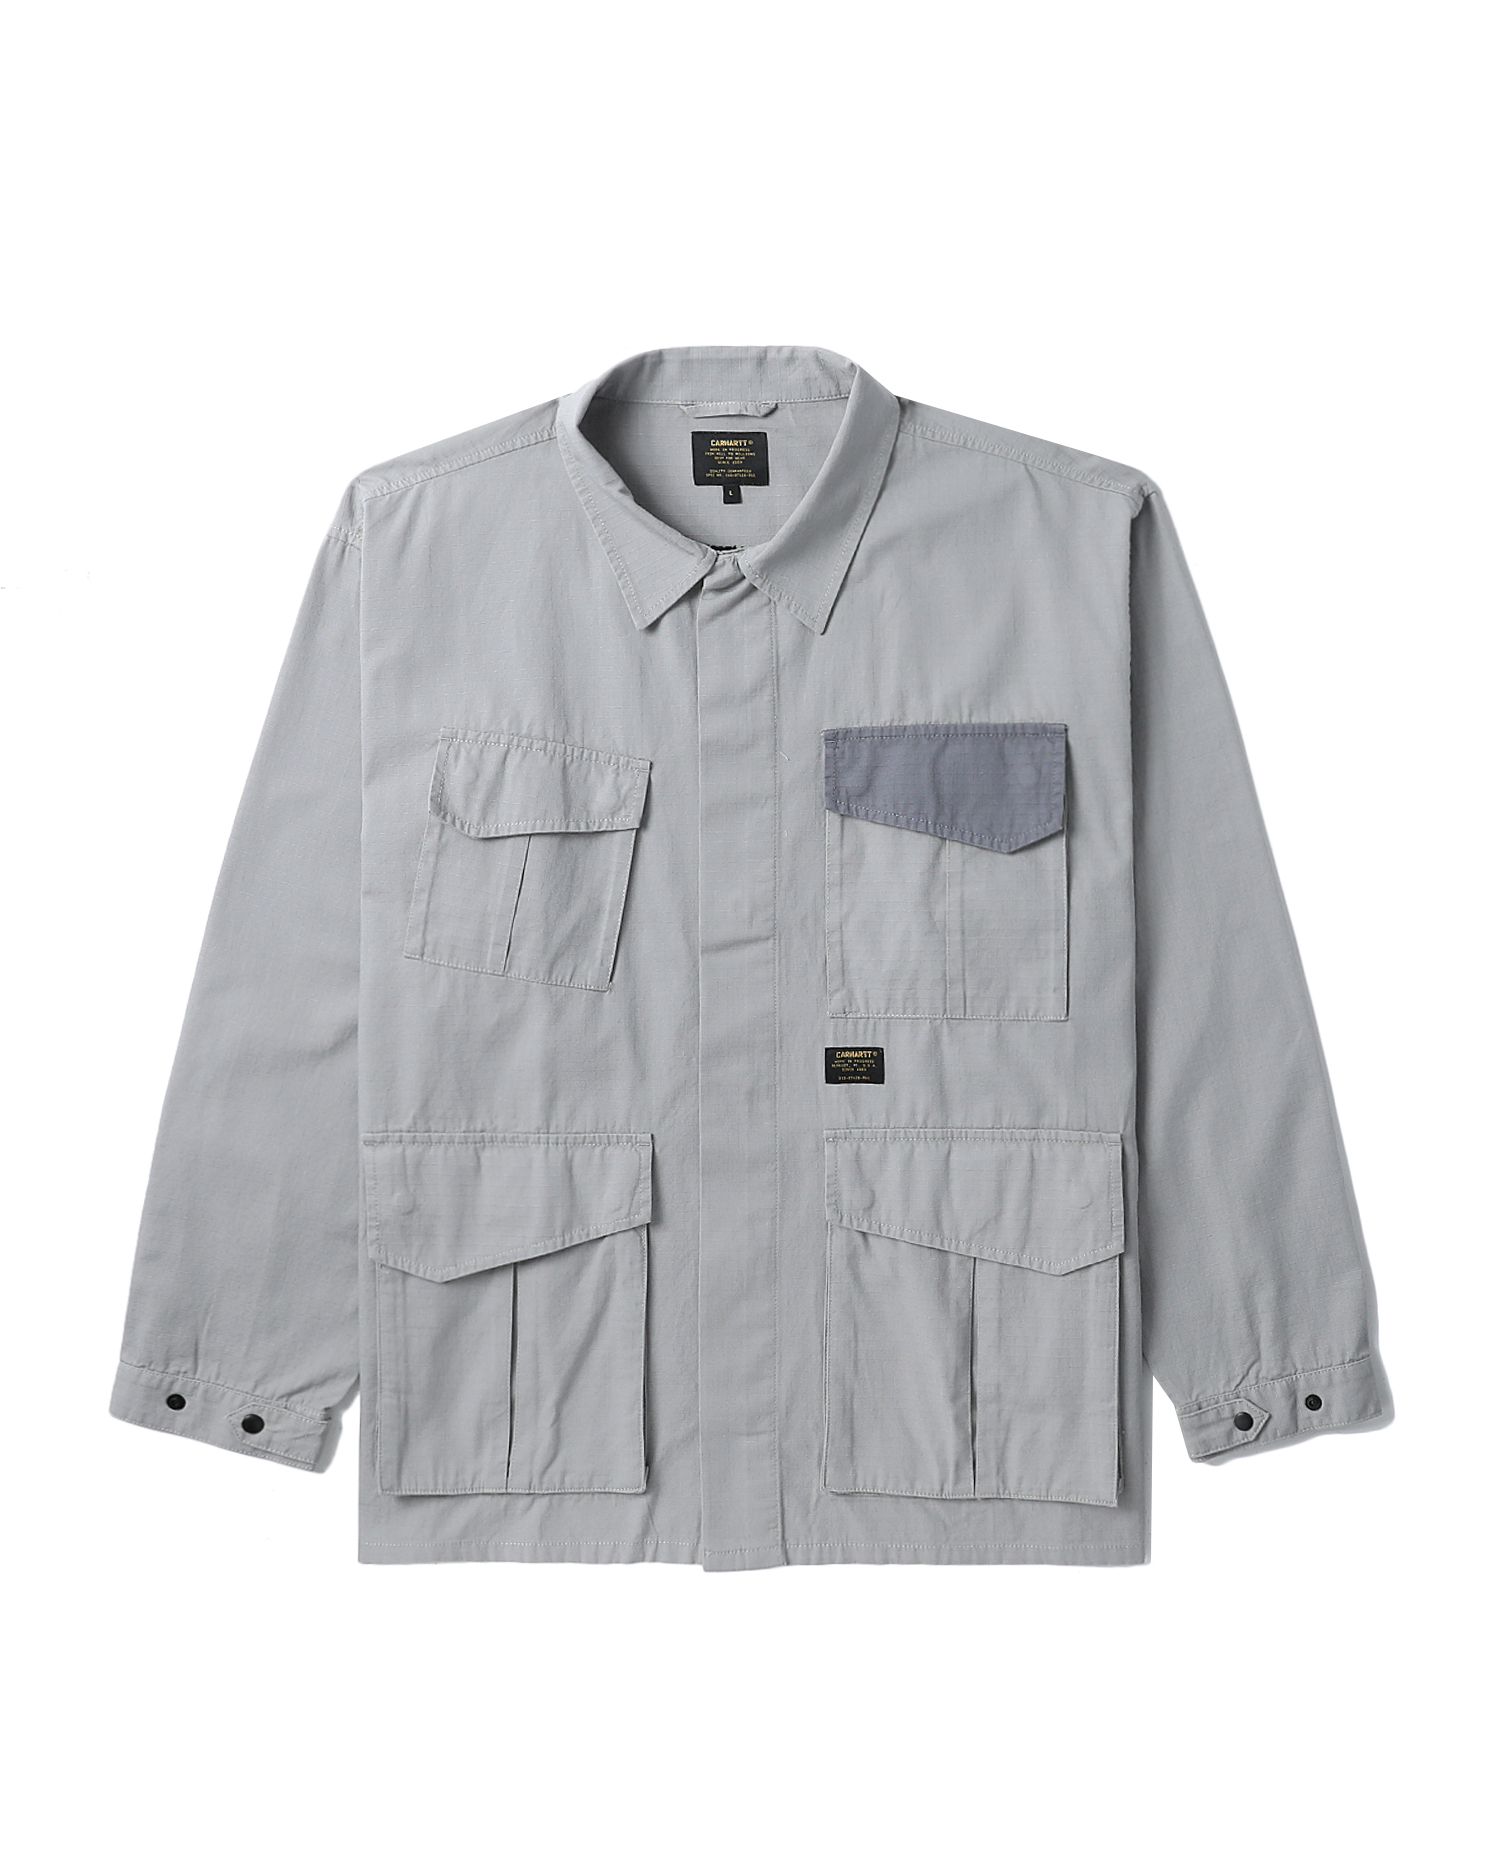 CARHARTT WIP Cadence shirt jacket | ITeSHOP